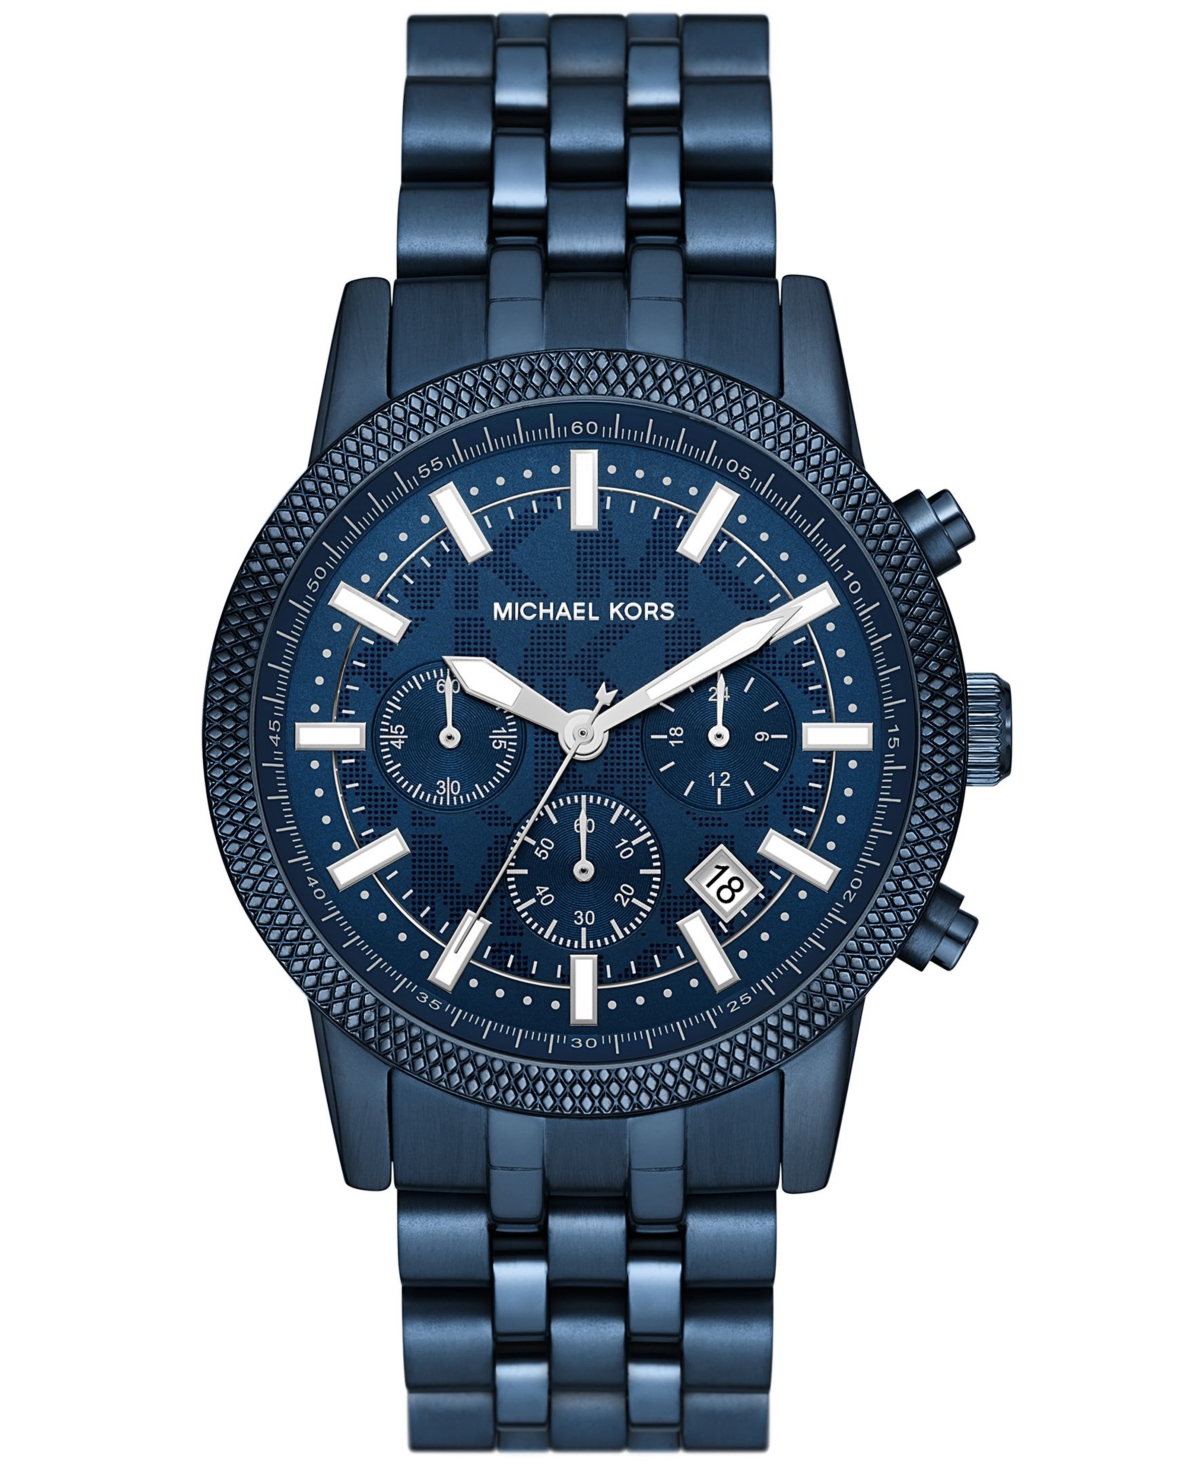 Michael Kors Men's Hutton Chronograph Navy Stainless Steel Bracelet Watch, 43mm